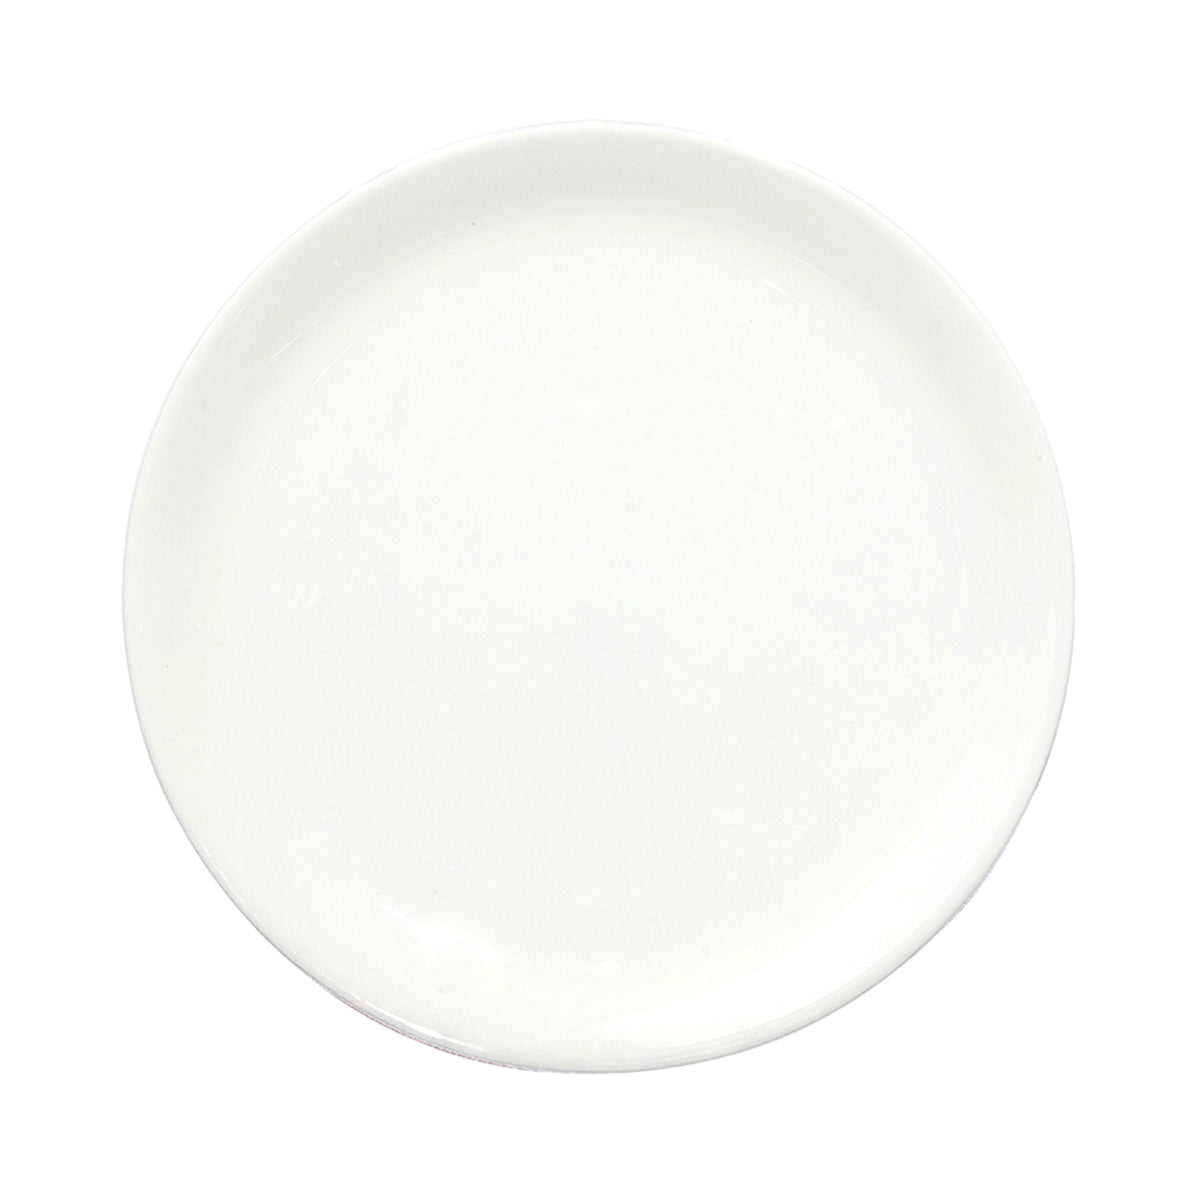 A Table Dinner Plate